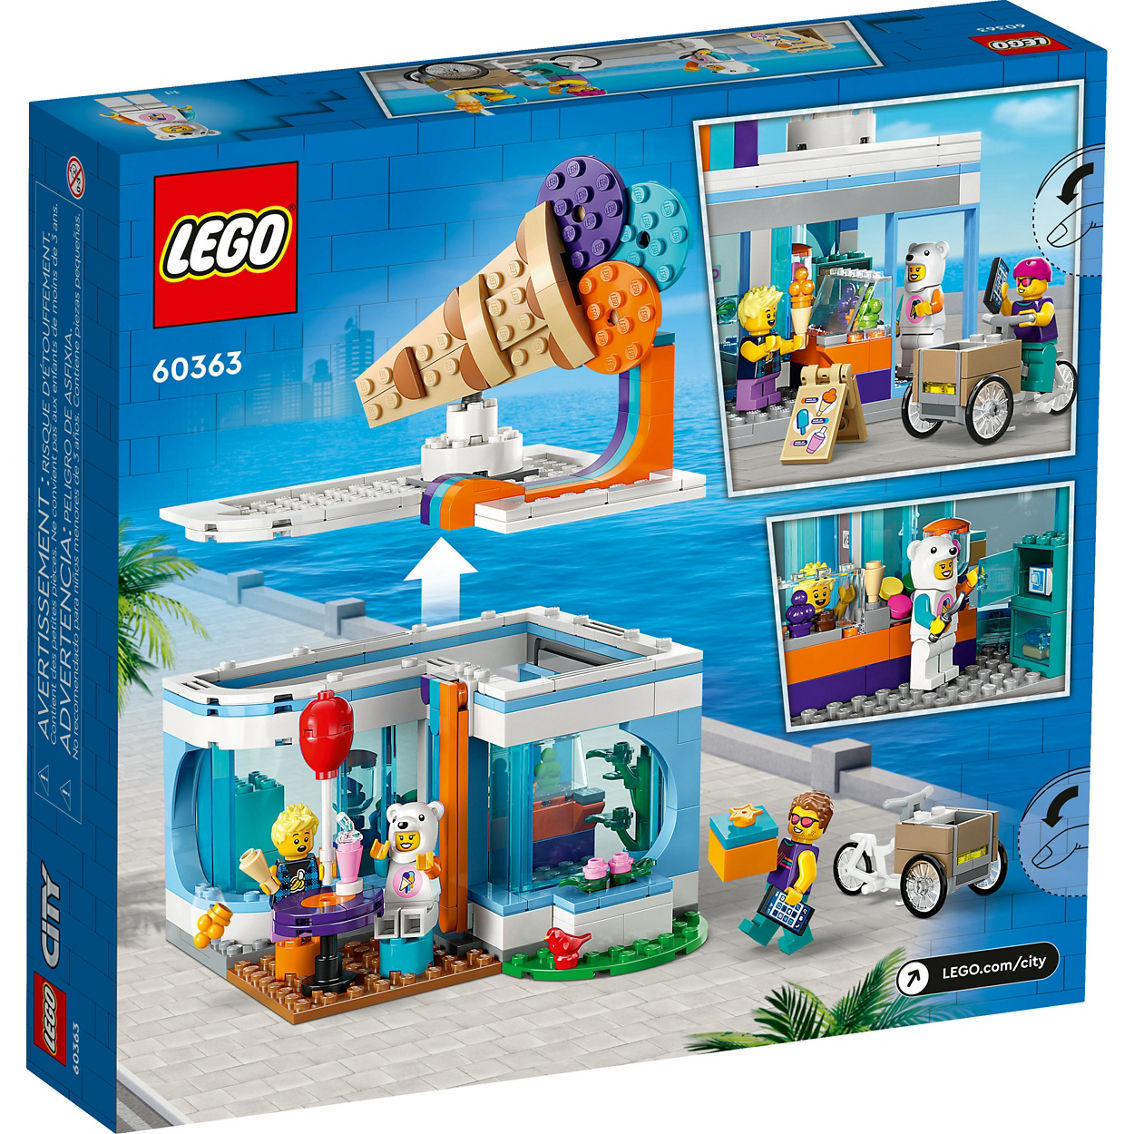 LEGO My City Ice Cream Shop 60363 - Image 2 of 10